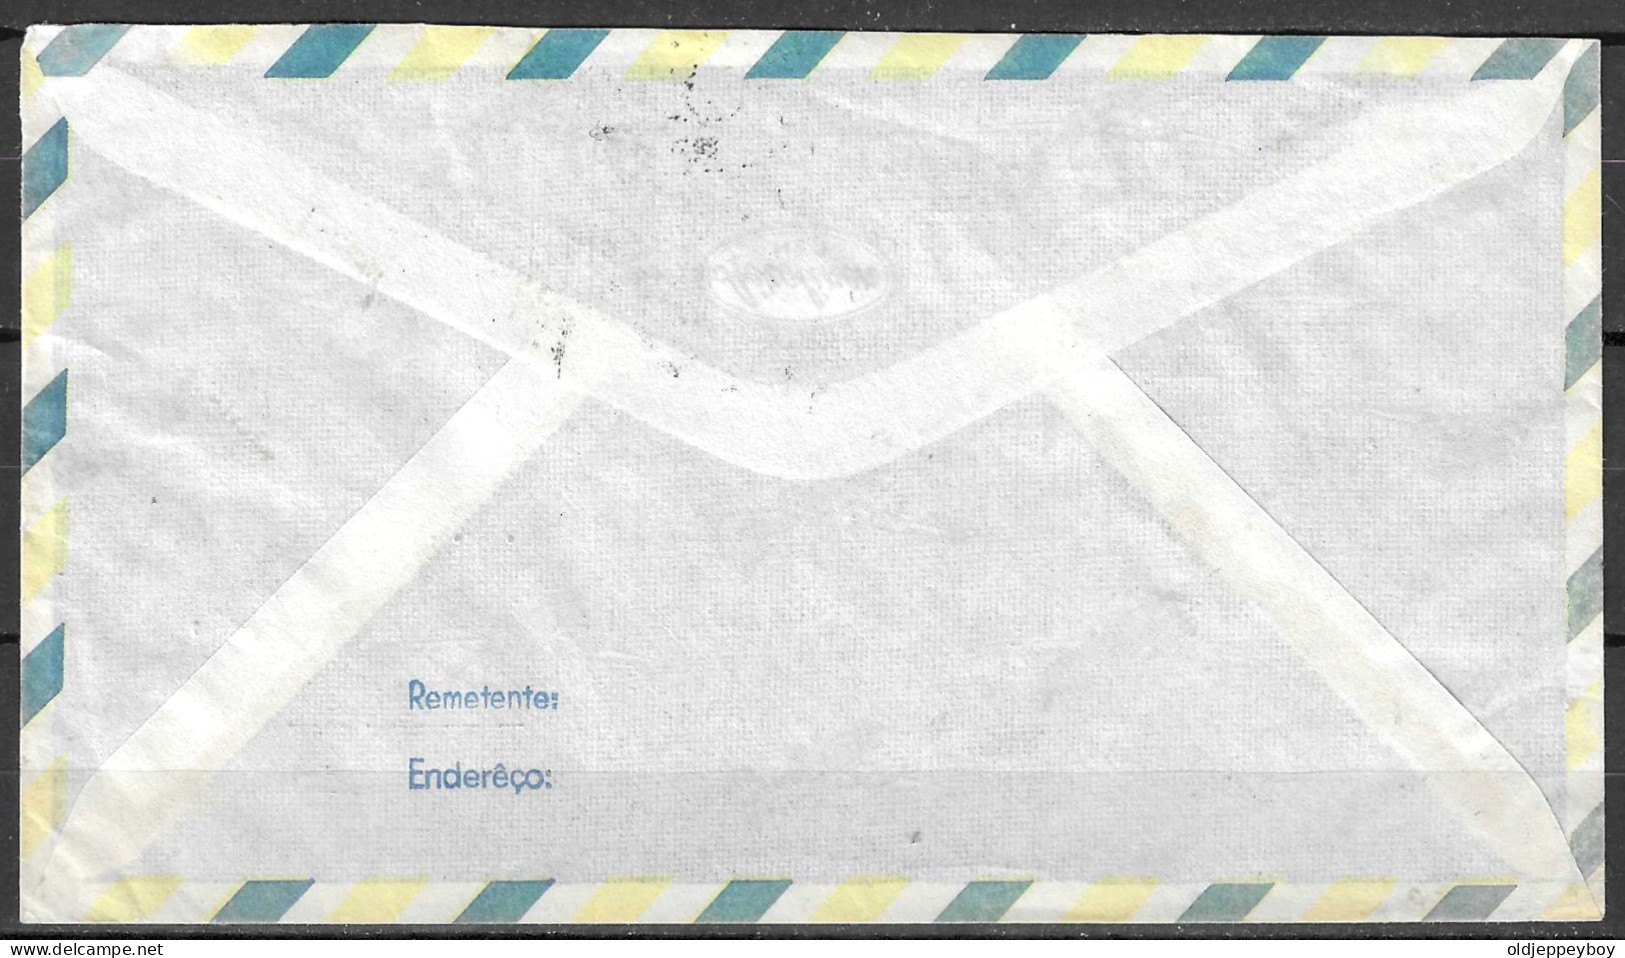 1962 Brazil Brasil Cover Envelope WIDMER & CIA BAHIA VIA AEREA  AIRMAIL TO ZURICH ZUERICH SUISSA SUISSE Switzerland   - Storia Postale